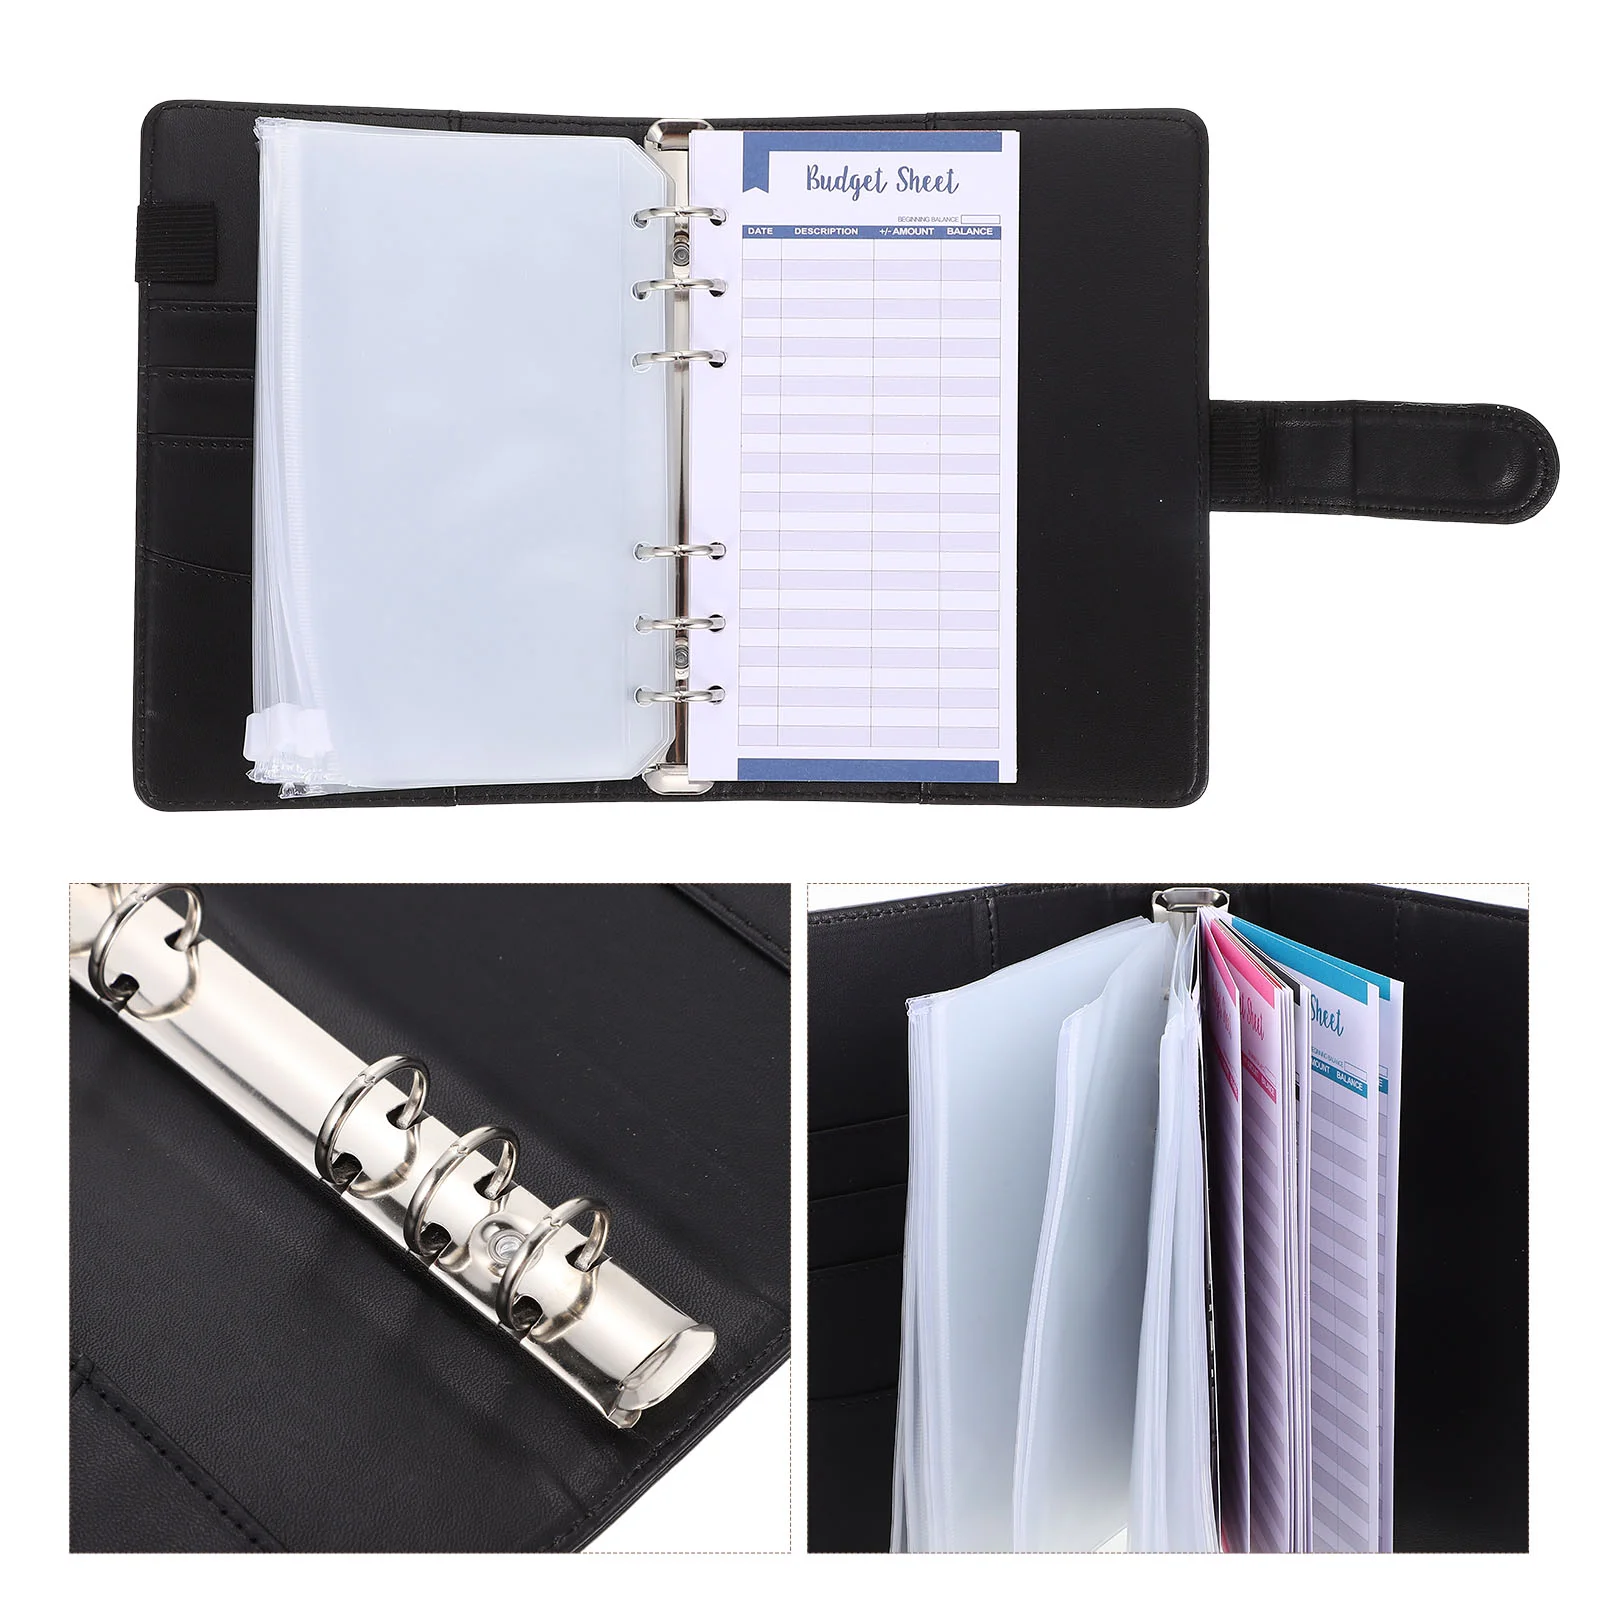 

Binder Budget Money Cash Envelopes Book Organizer Savingbudgeting Planner A6 Zipper Notebook Envelopenotepad Pockets Pouches